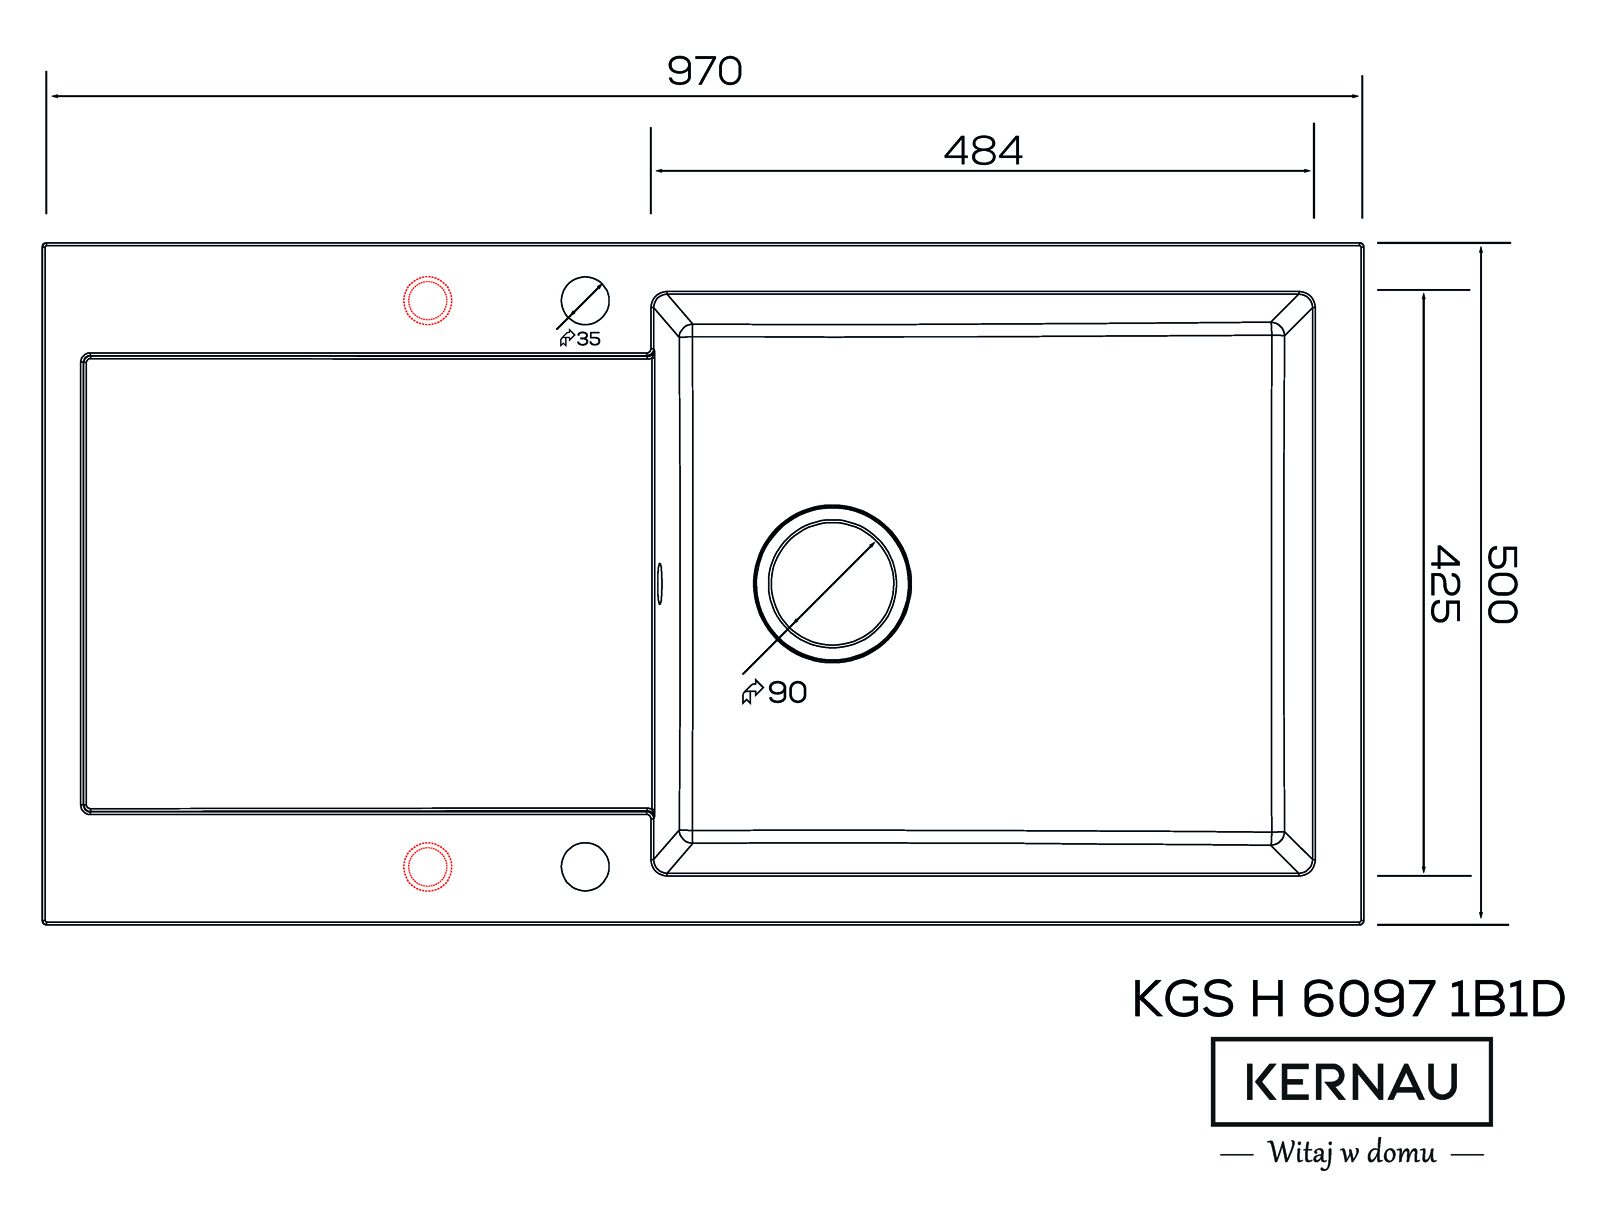 Кухонная мойка KERNAU KGS H 6097 1B1D WHITE